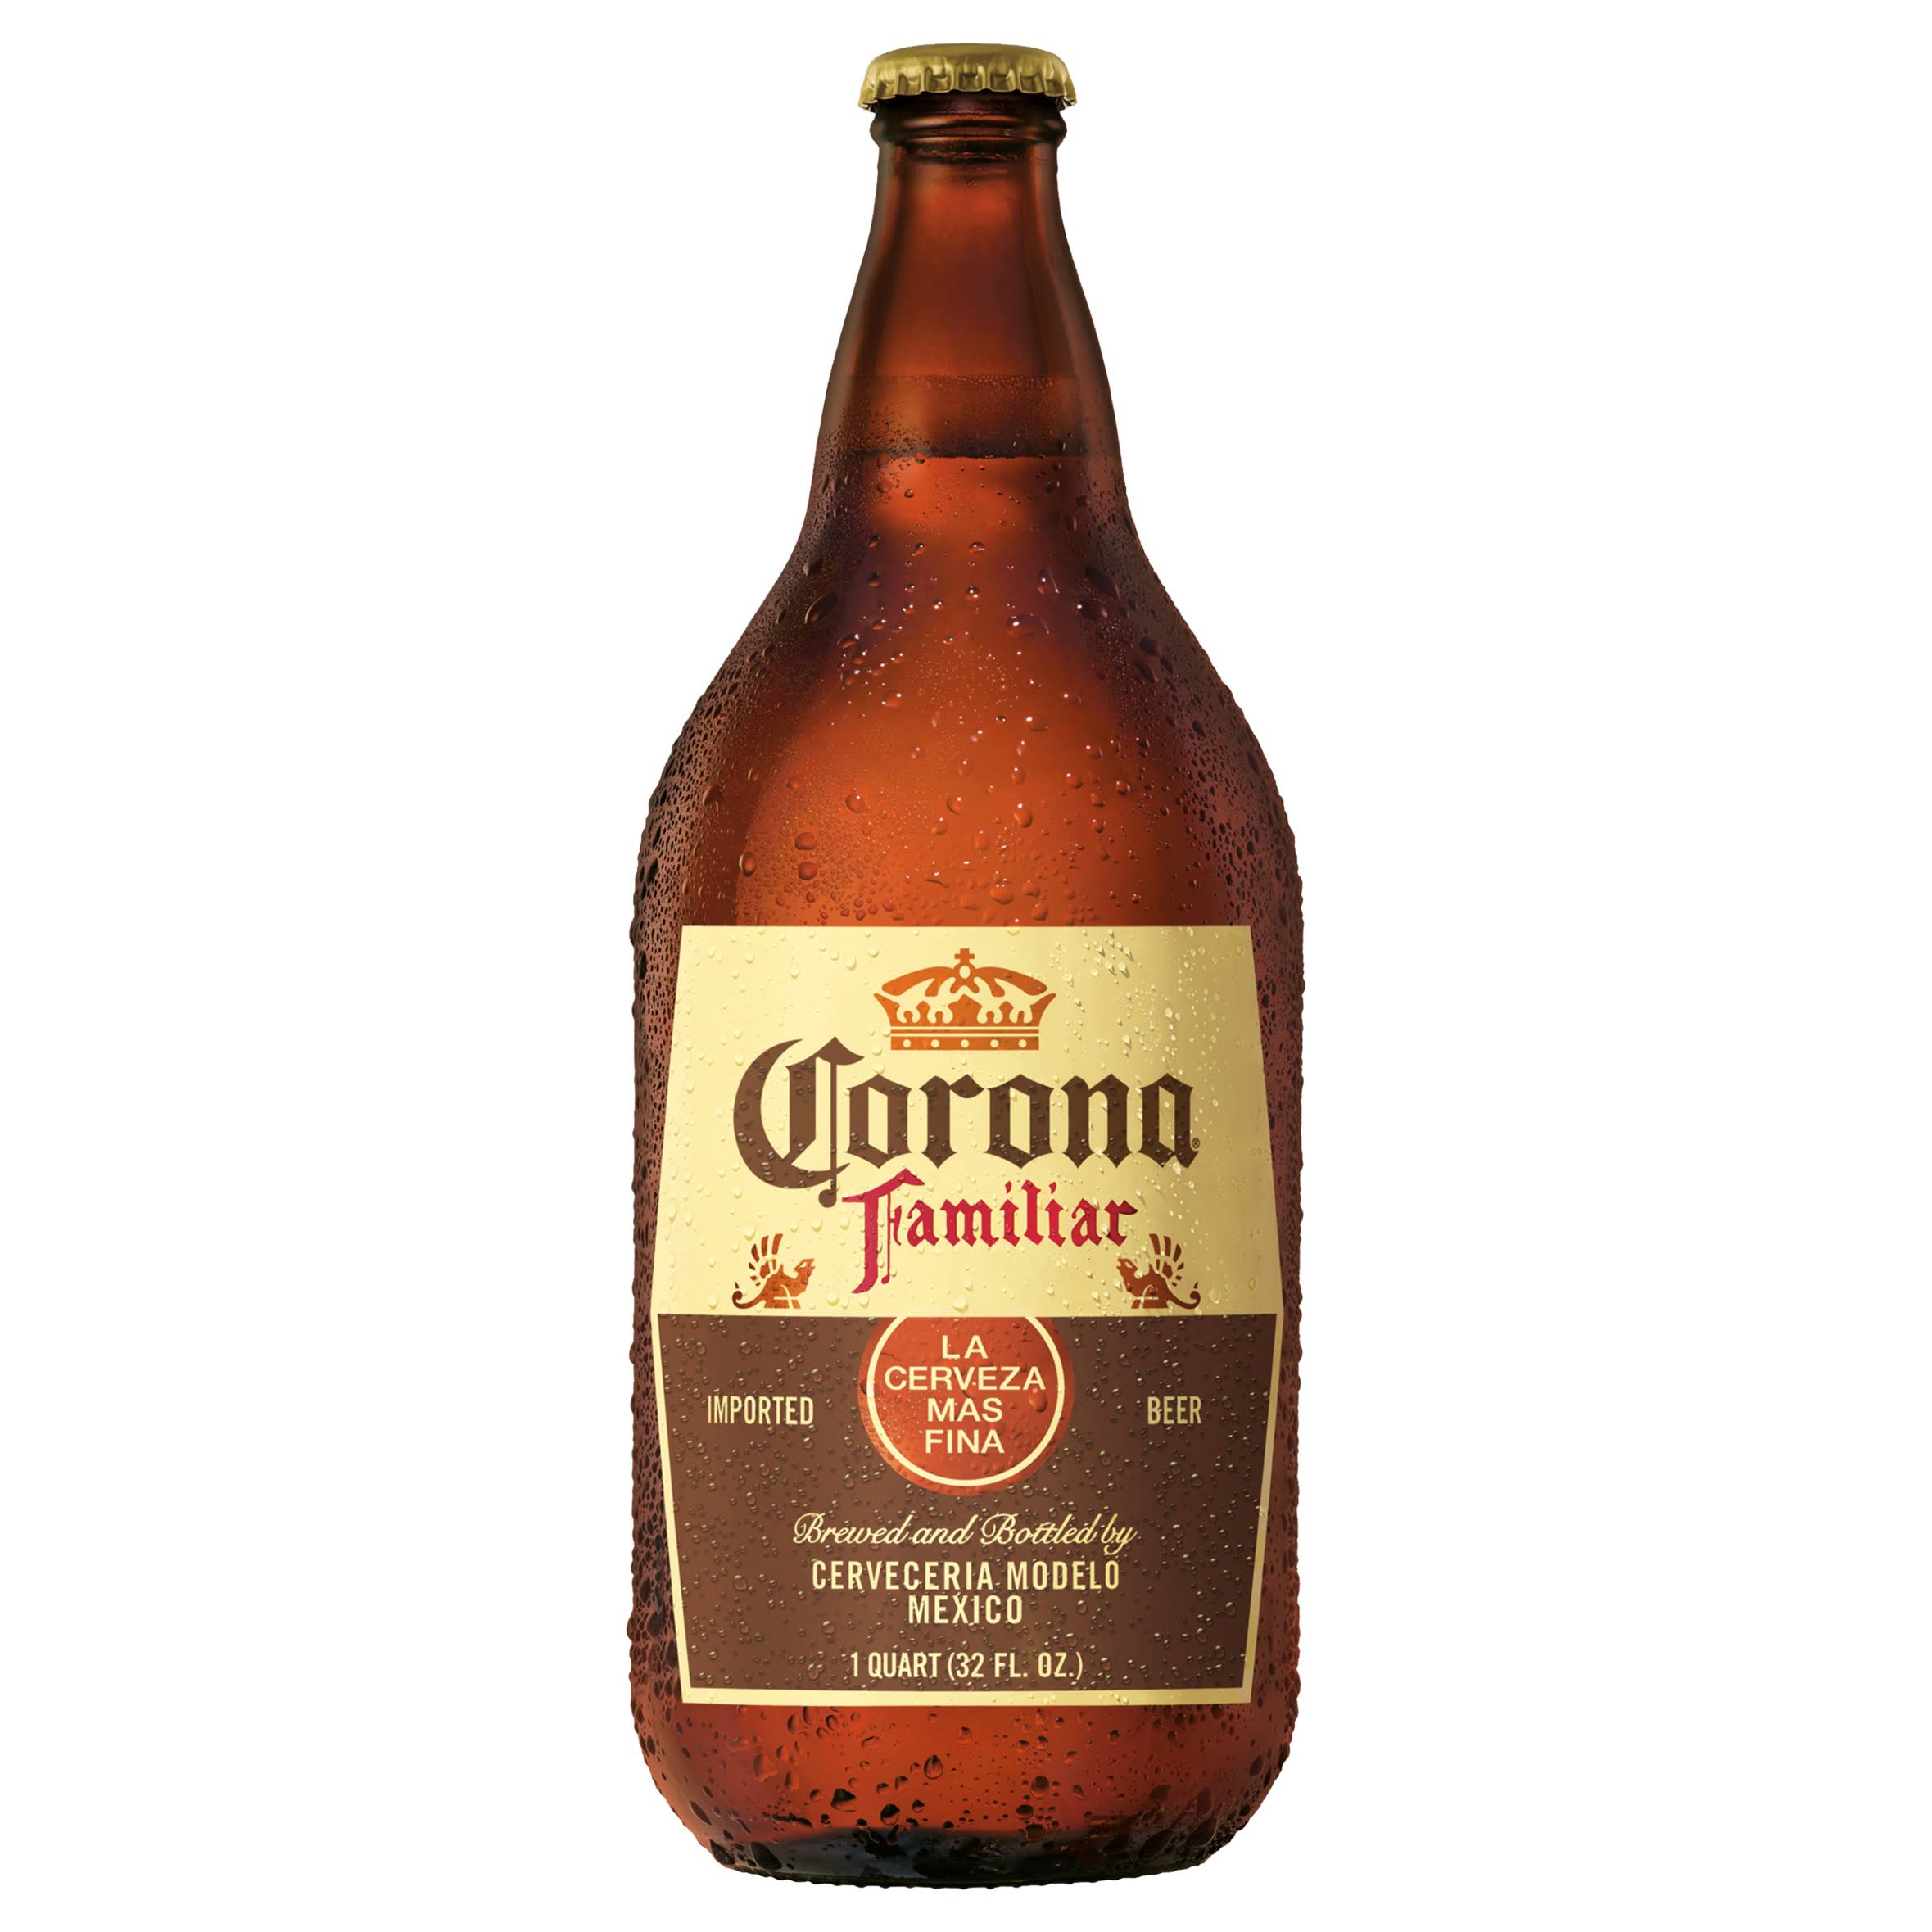 Corona Familiar Beer, Imported - 1 quart